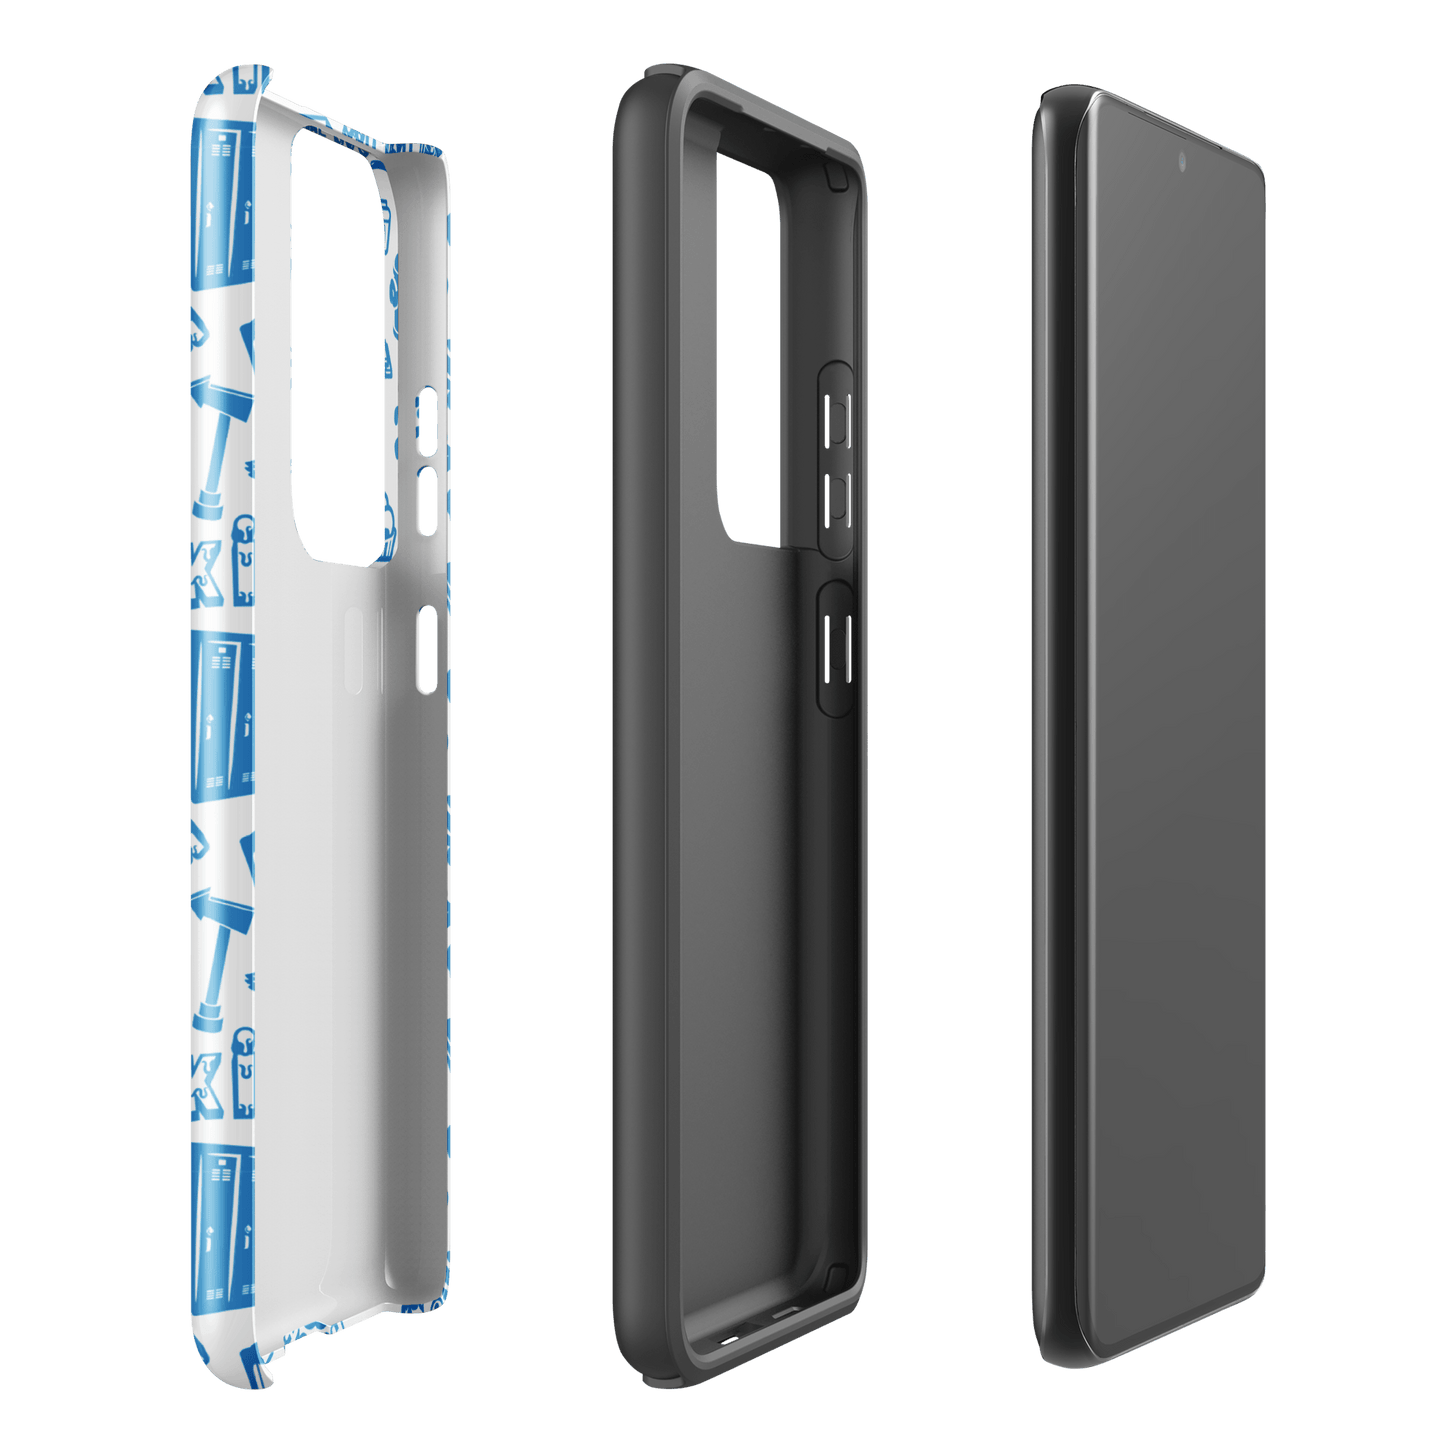 Double Dare Pop Lockin Pattern Tough Phone Case - Samsung - Paramount Shop